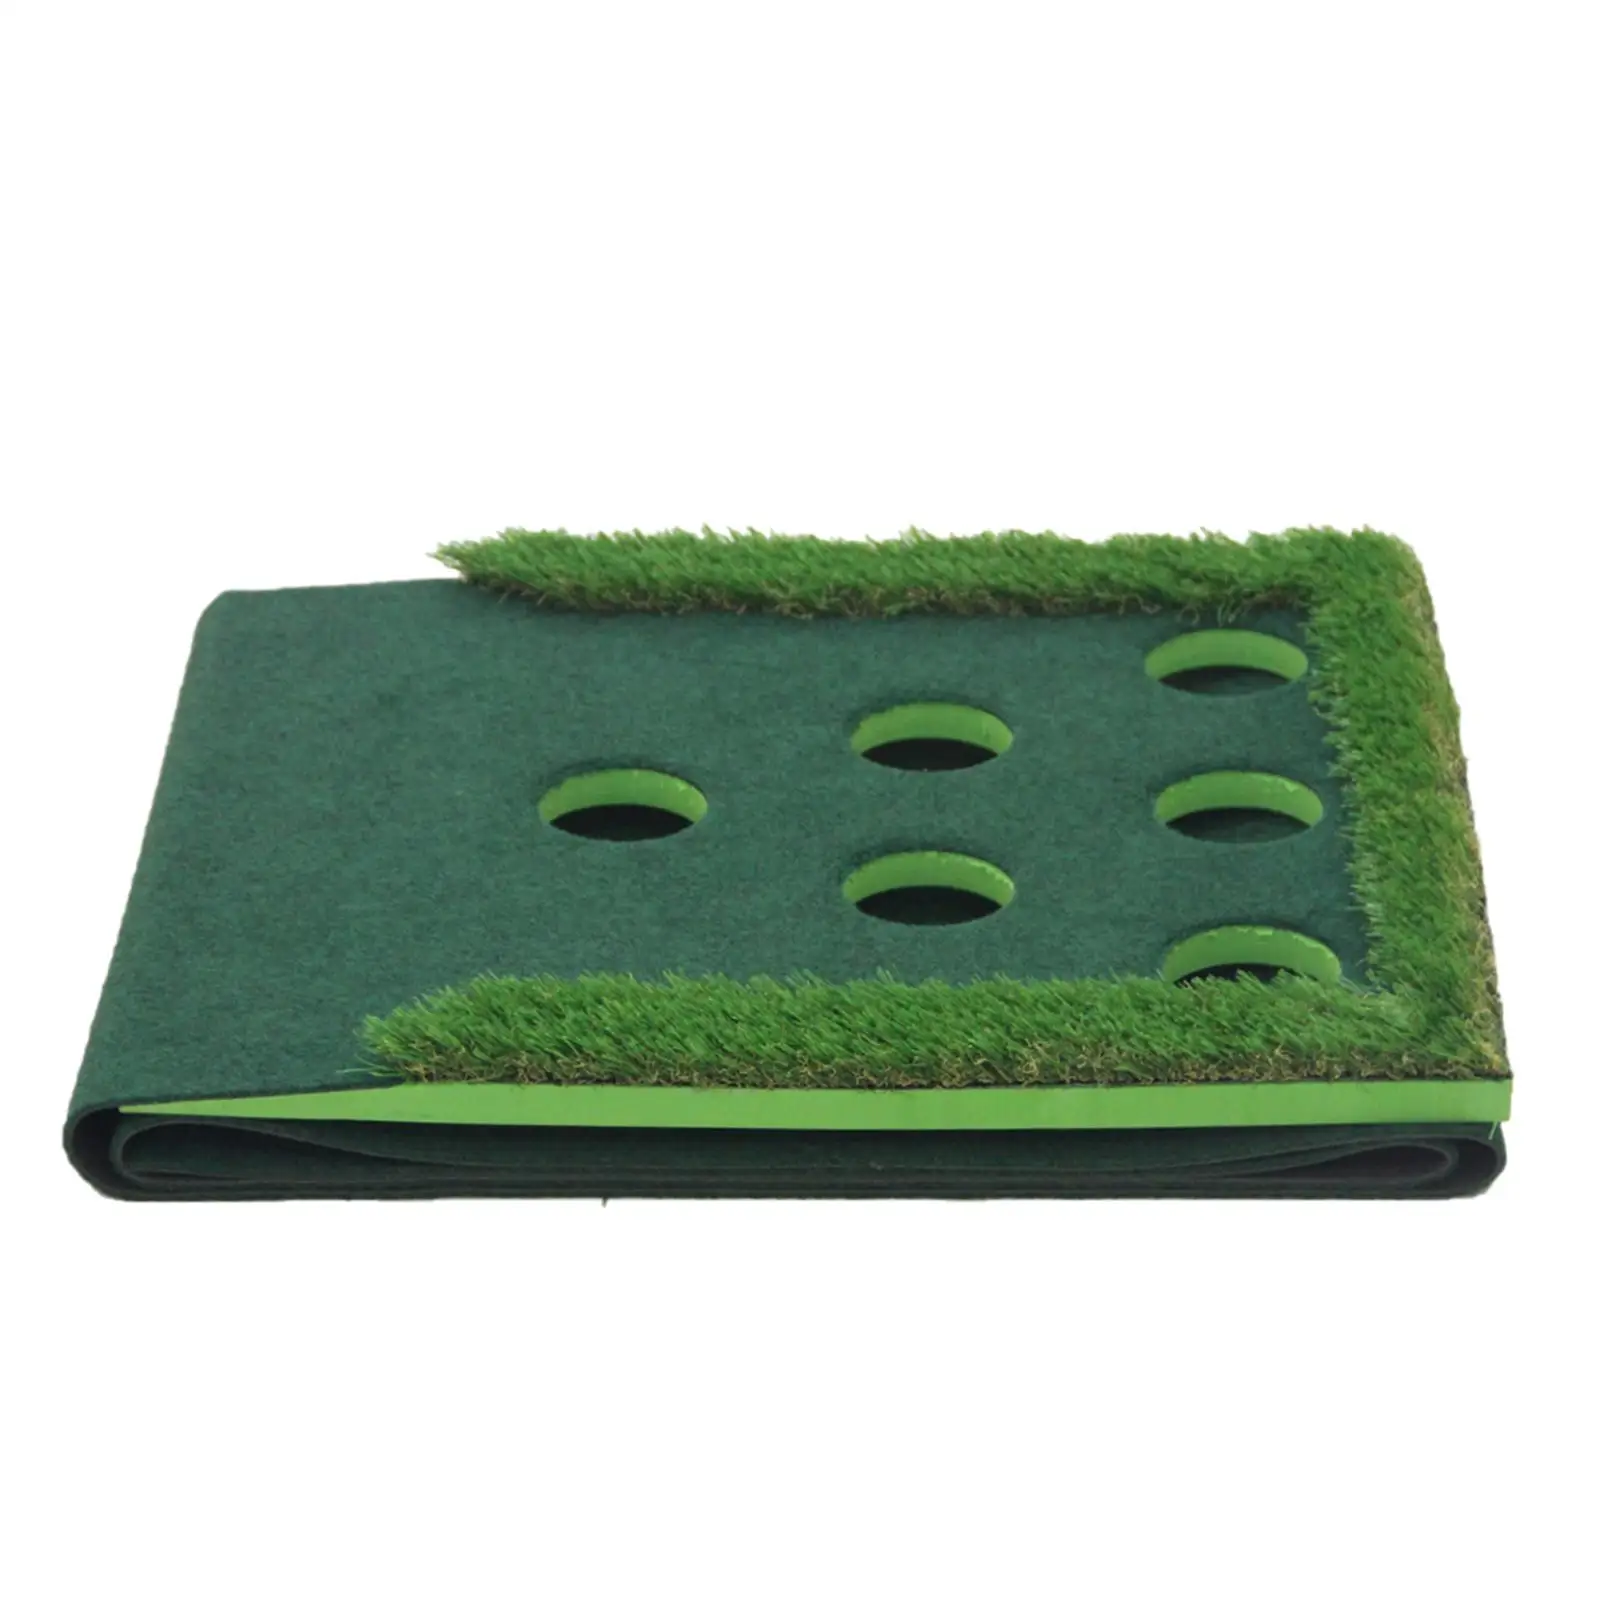 Portable Golf Practice Hitting Mat Anti- Turf Chipping Collapsible Lightweight Carpet for Backyard, , Driving Range